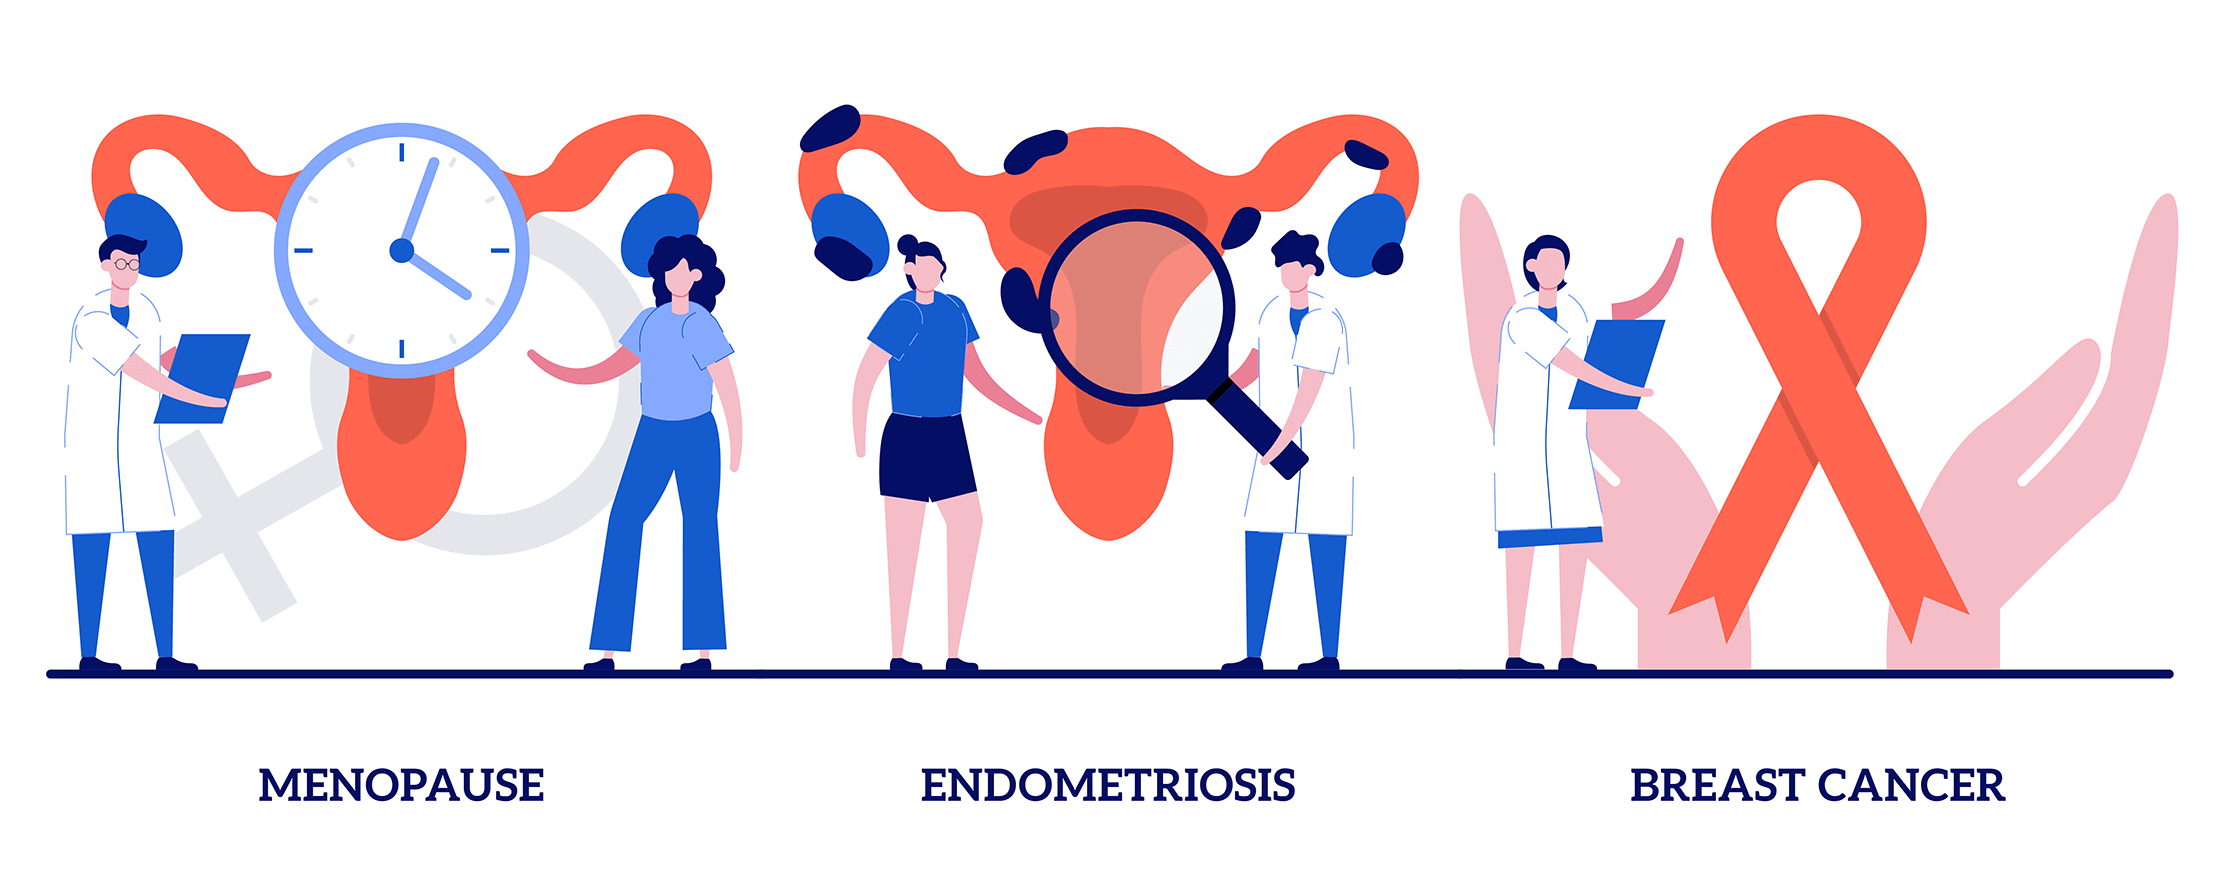 A closer look at ENDOMETRIOSIS